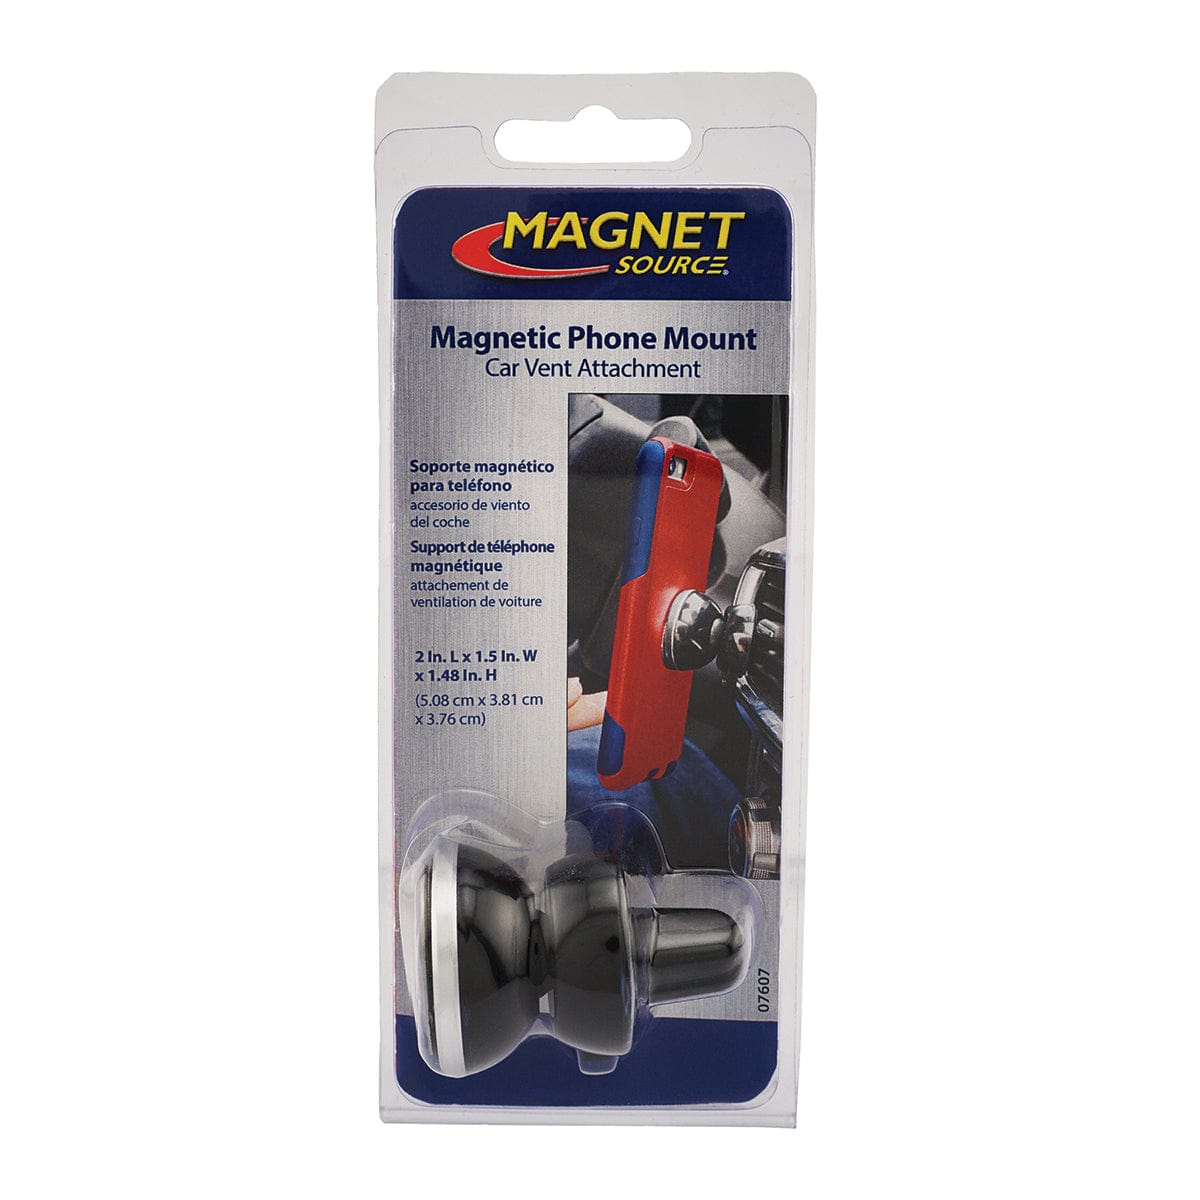 Magnet Source Magnetic Phone Mount, Car Vent Attachment